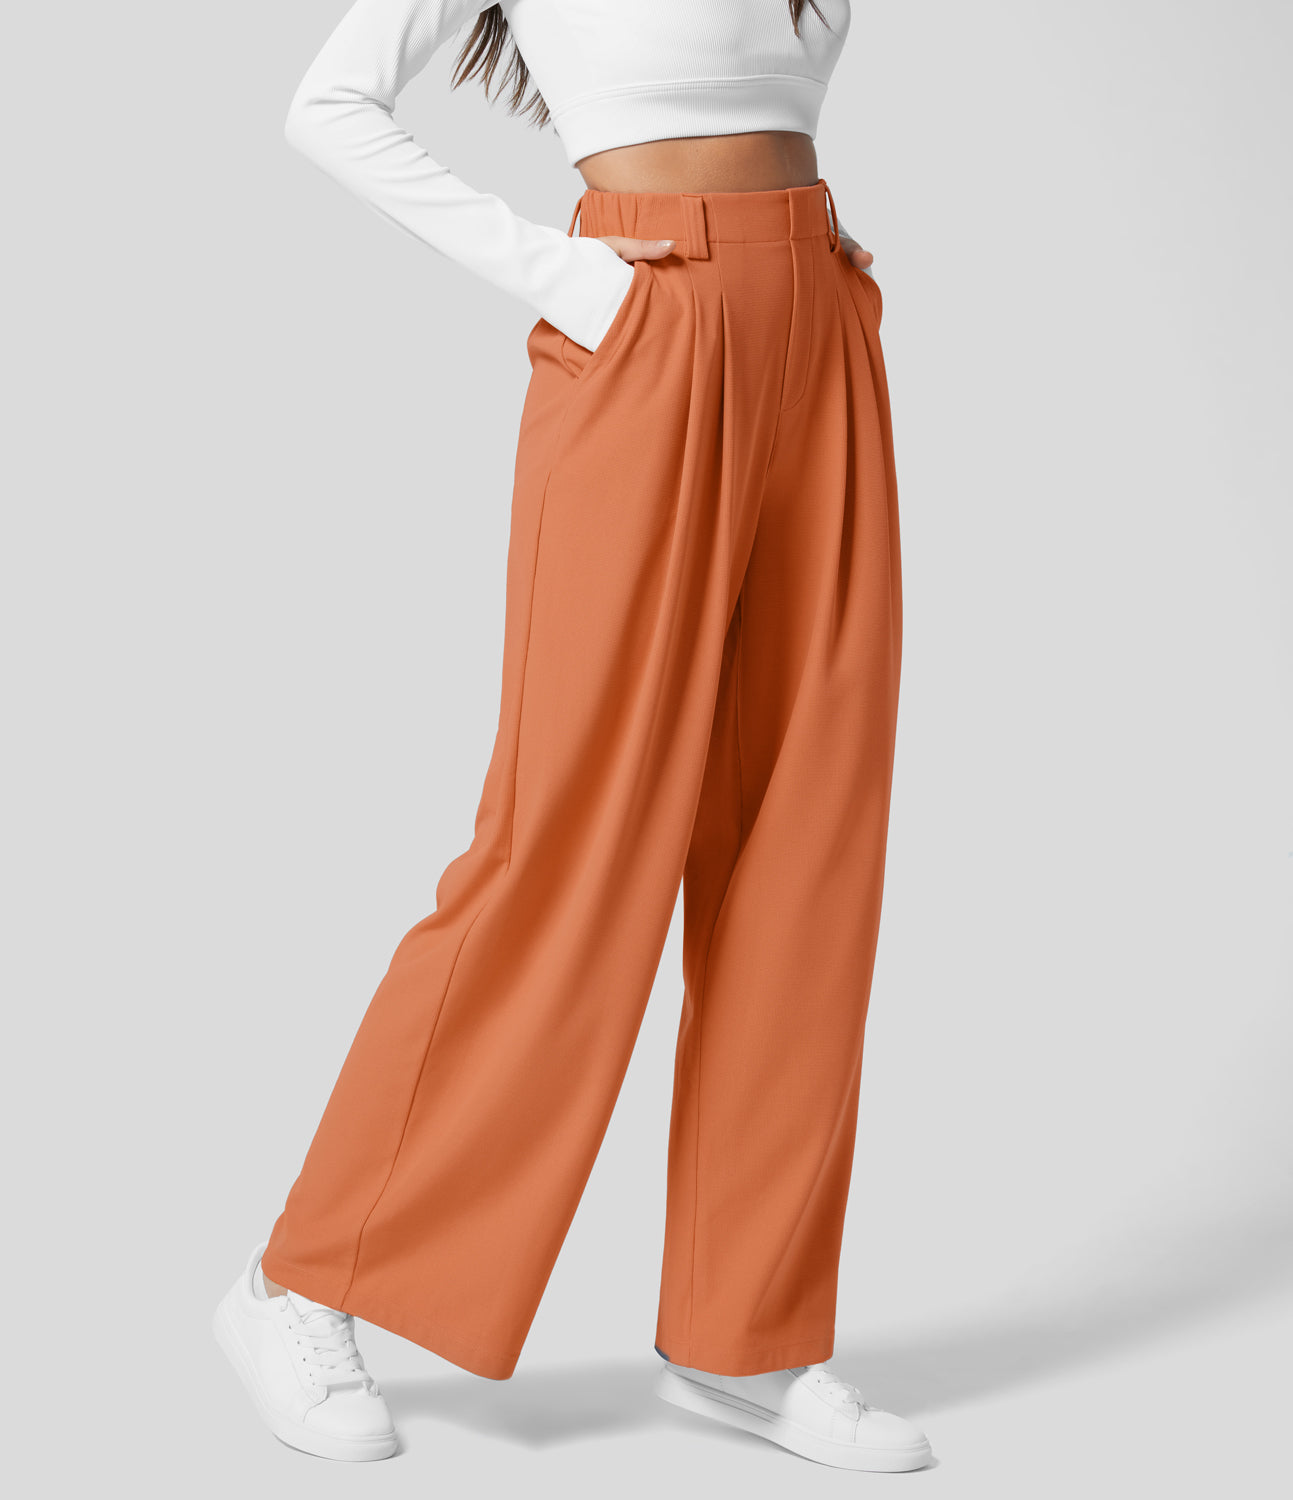 25% Discount! Halara High Waisted Plicated Side Pocket Wide Leg Casual Pants  - Apricot Orange - L(regular) sweatpants jogger pants stacked sweatpants  Halara. Global